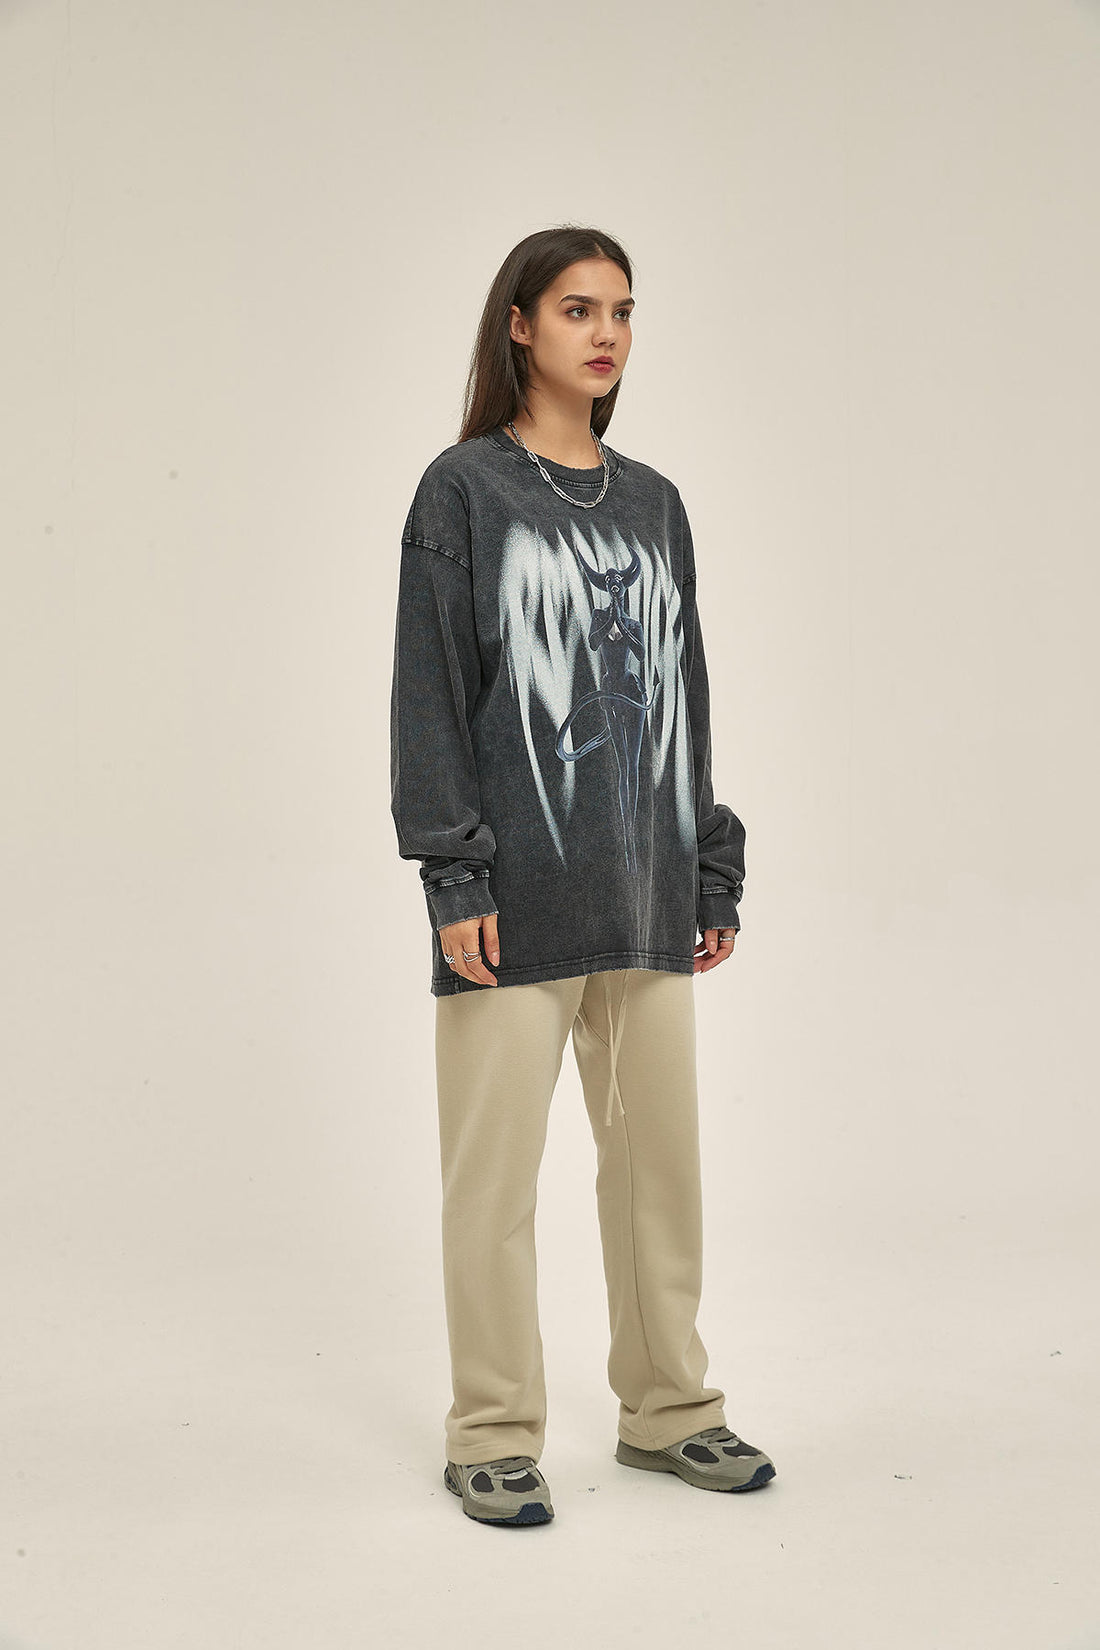 250G Portrait Print Women Long-Sleeved Sweatshirt